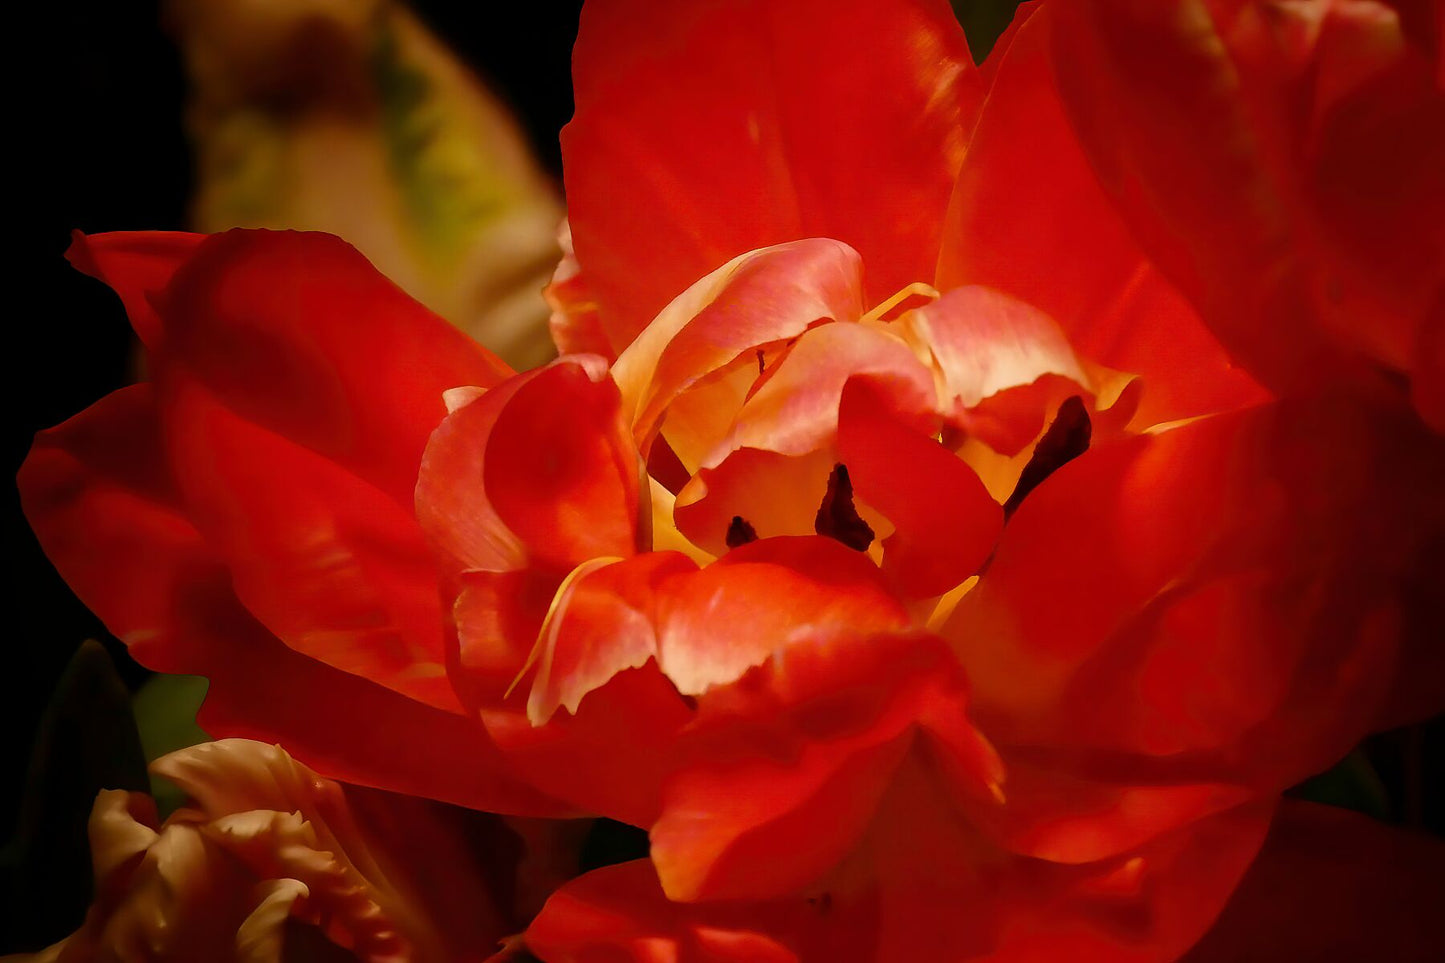 Red Tulip close up III